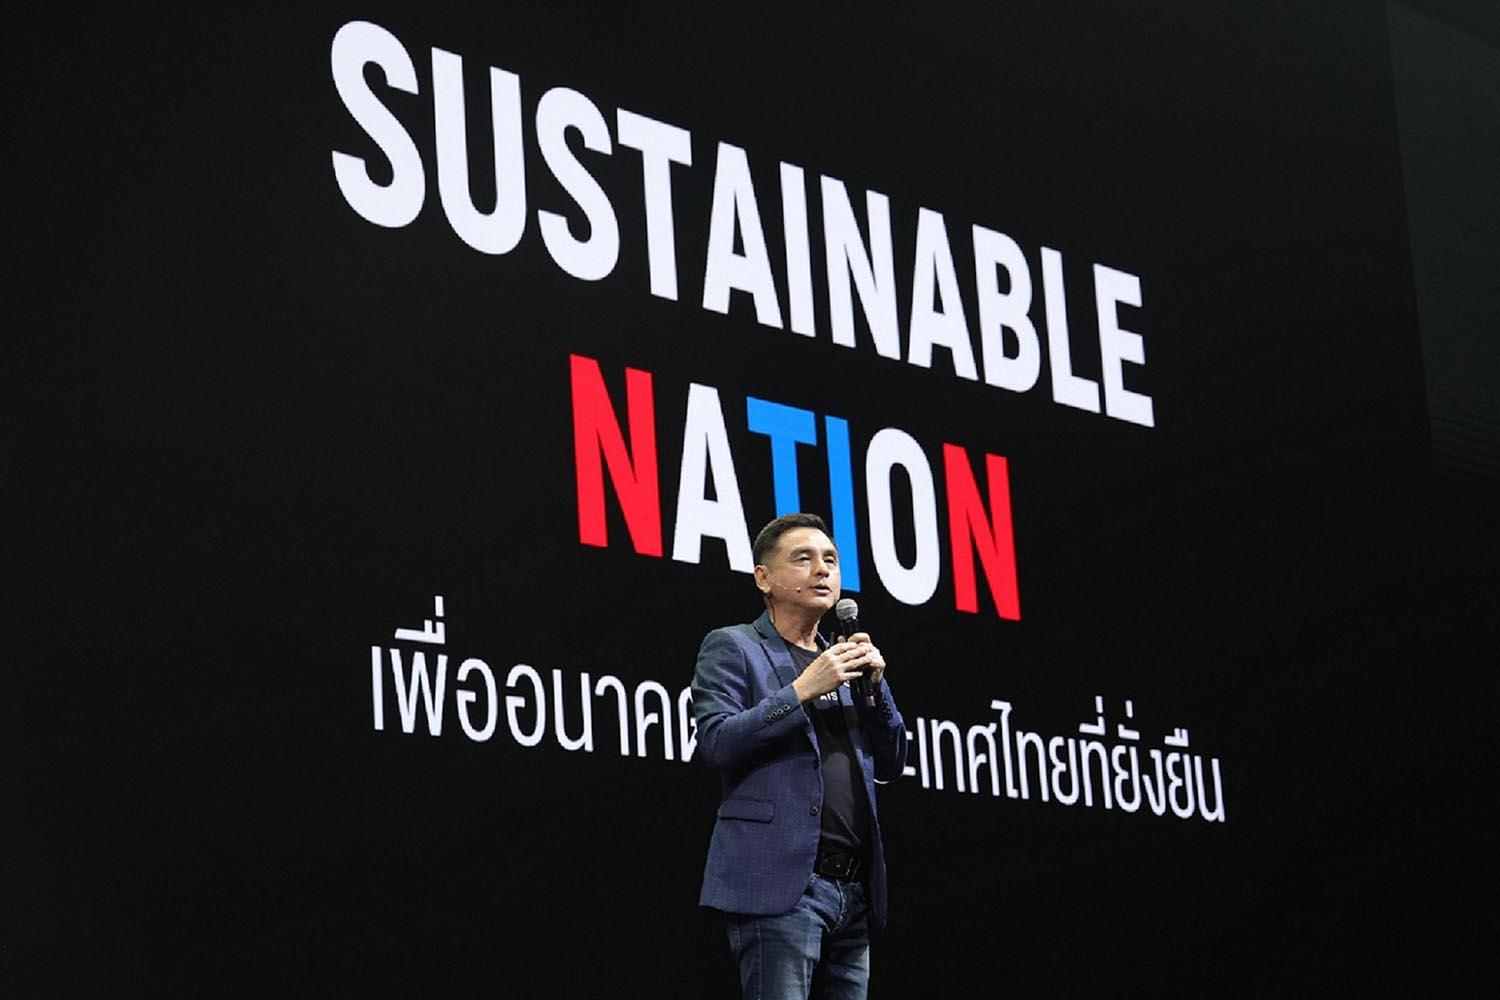 ais-sustainable-nation-look-fw-green-network-digital-e-waste-SPACEBAR-Hero.jpg